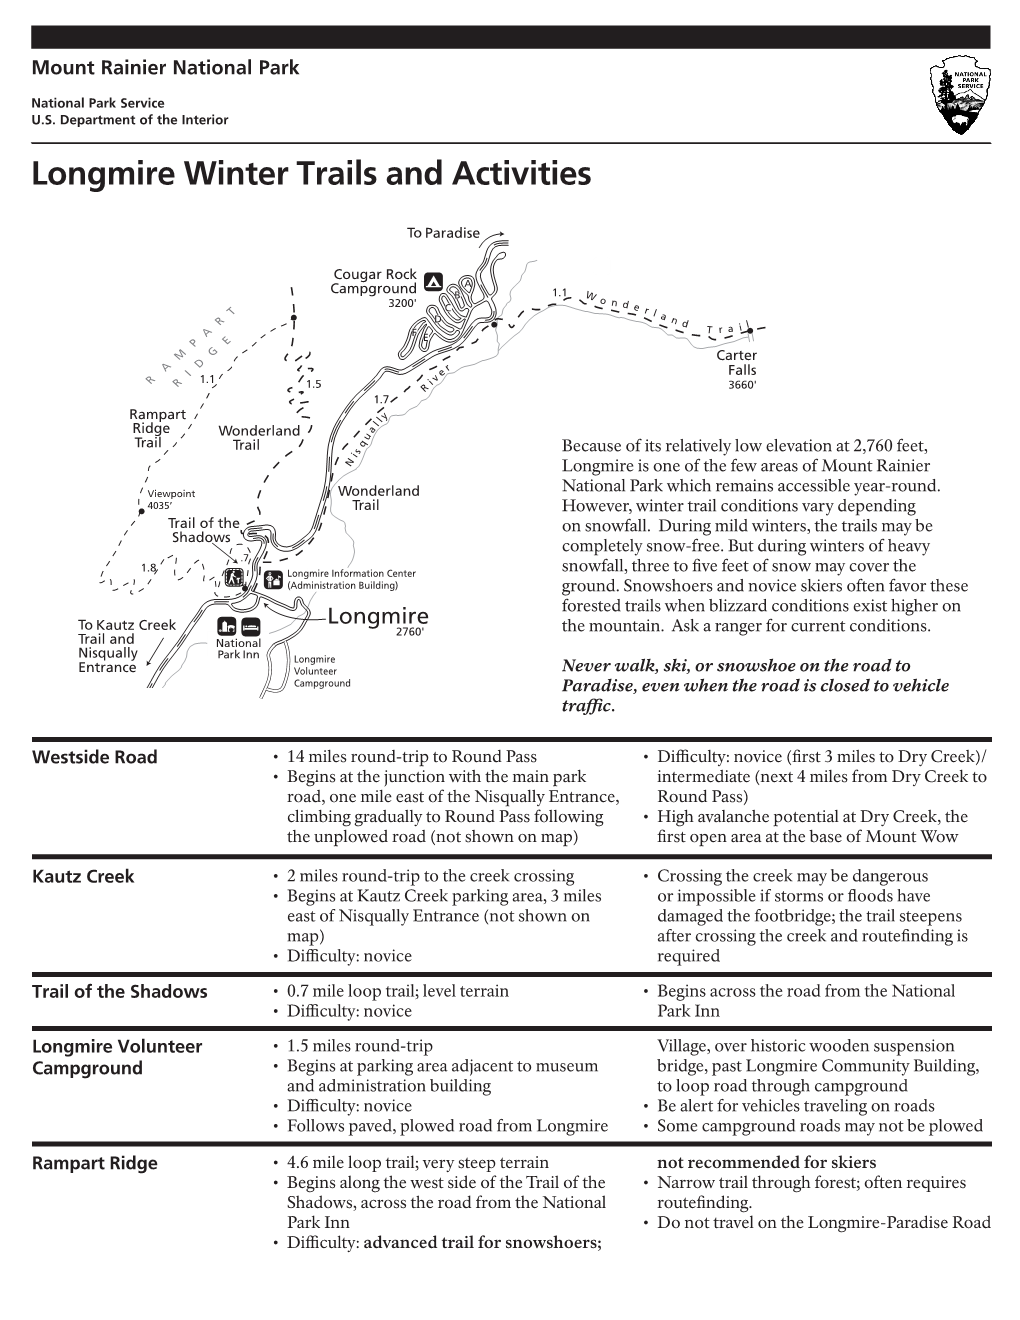 Longmire Winter Trails and Activities